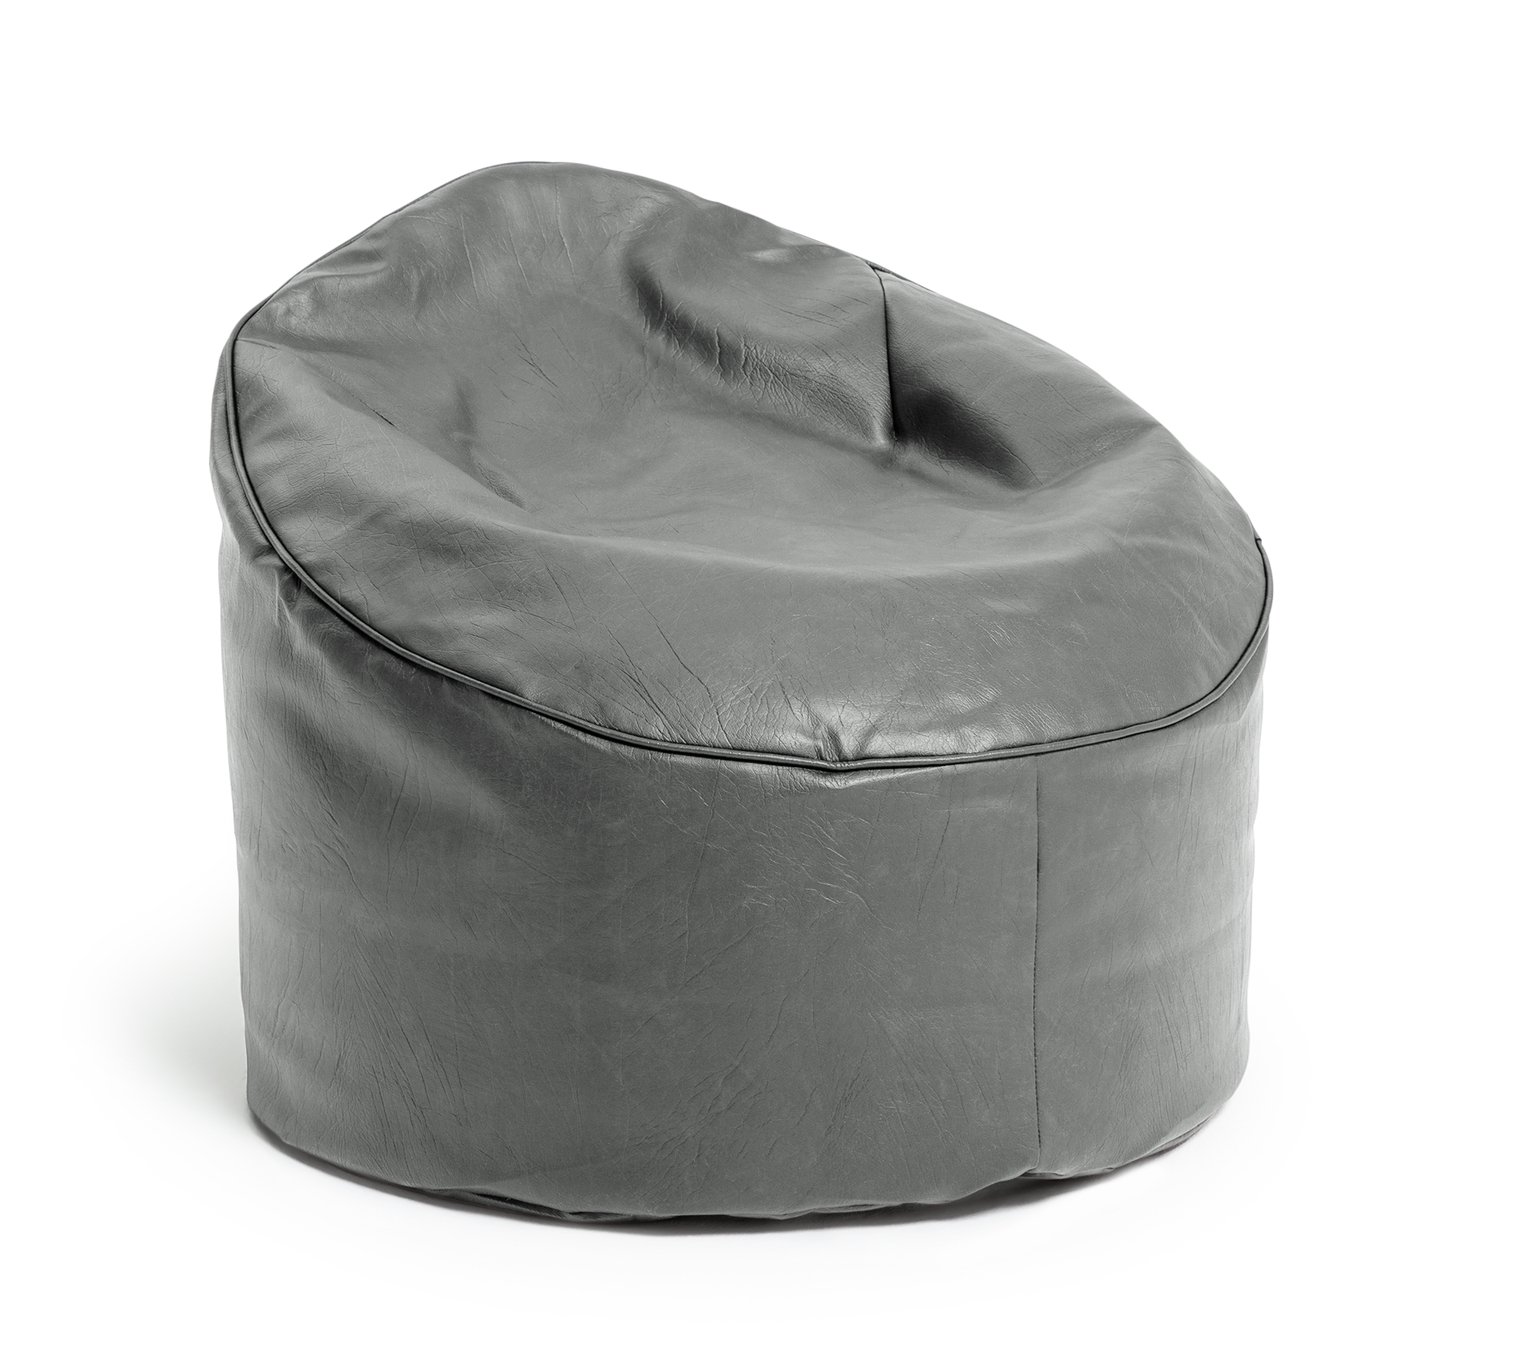 Argos Home Faux Leather Bean Bag Chair Review